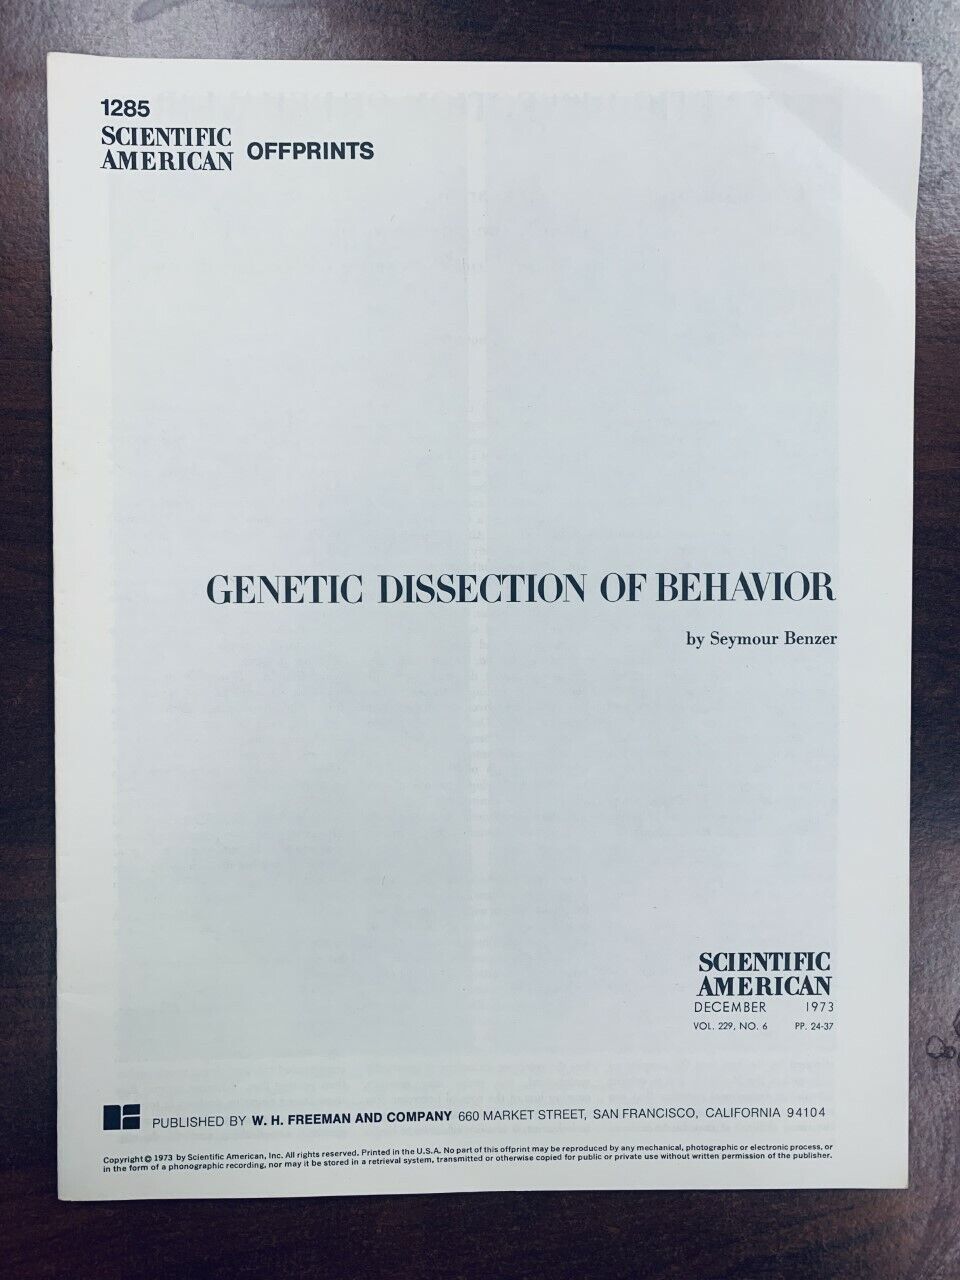 Scientific American Offprint - GENETIC DISSECTION OF BEHAVIOR - December 1973